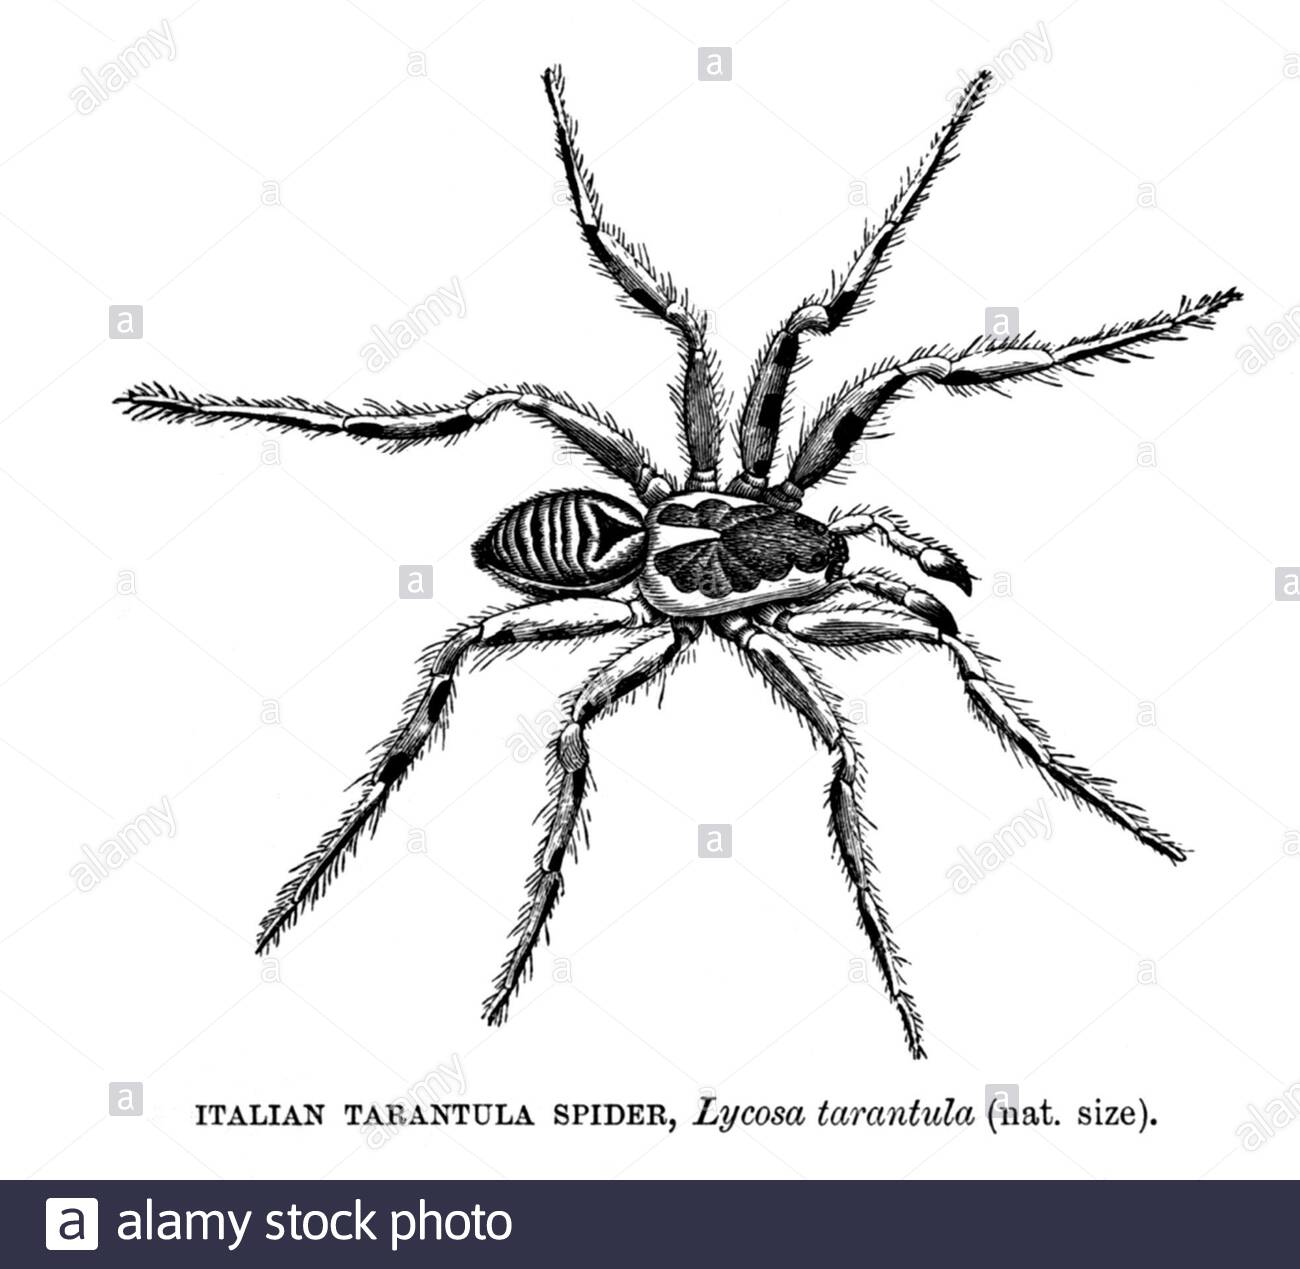 Italian Tarantula Spider, vintage illustration from 1896 Stock Photo